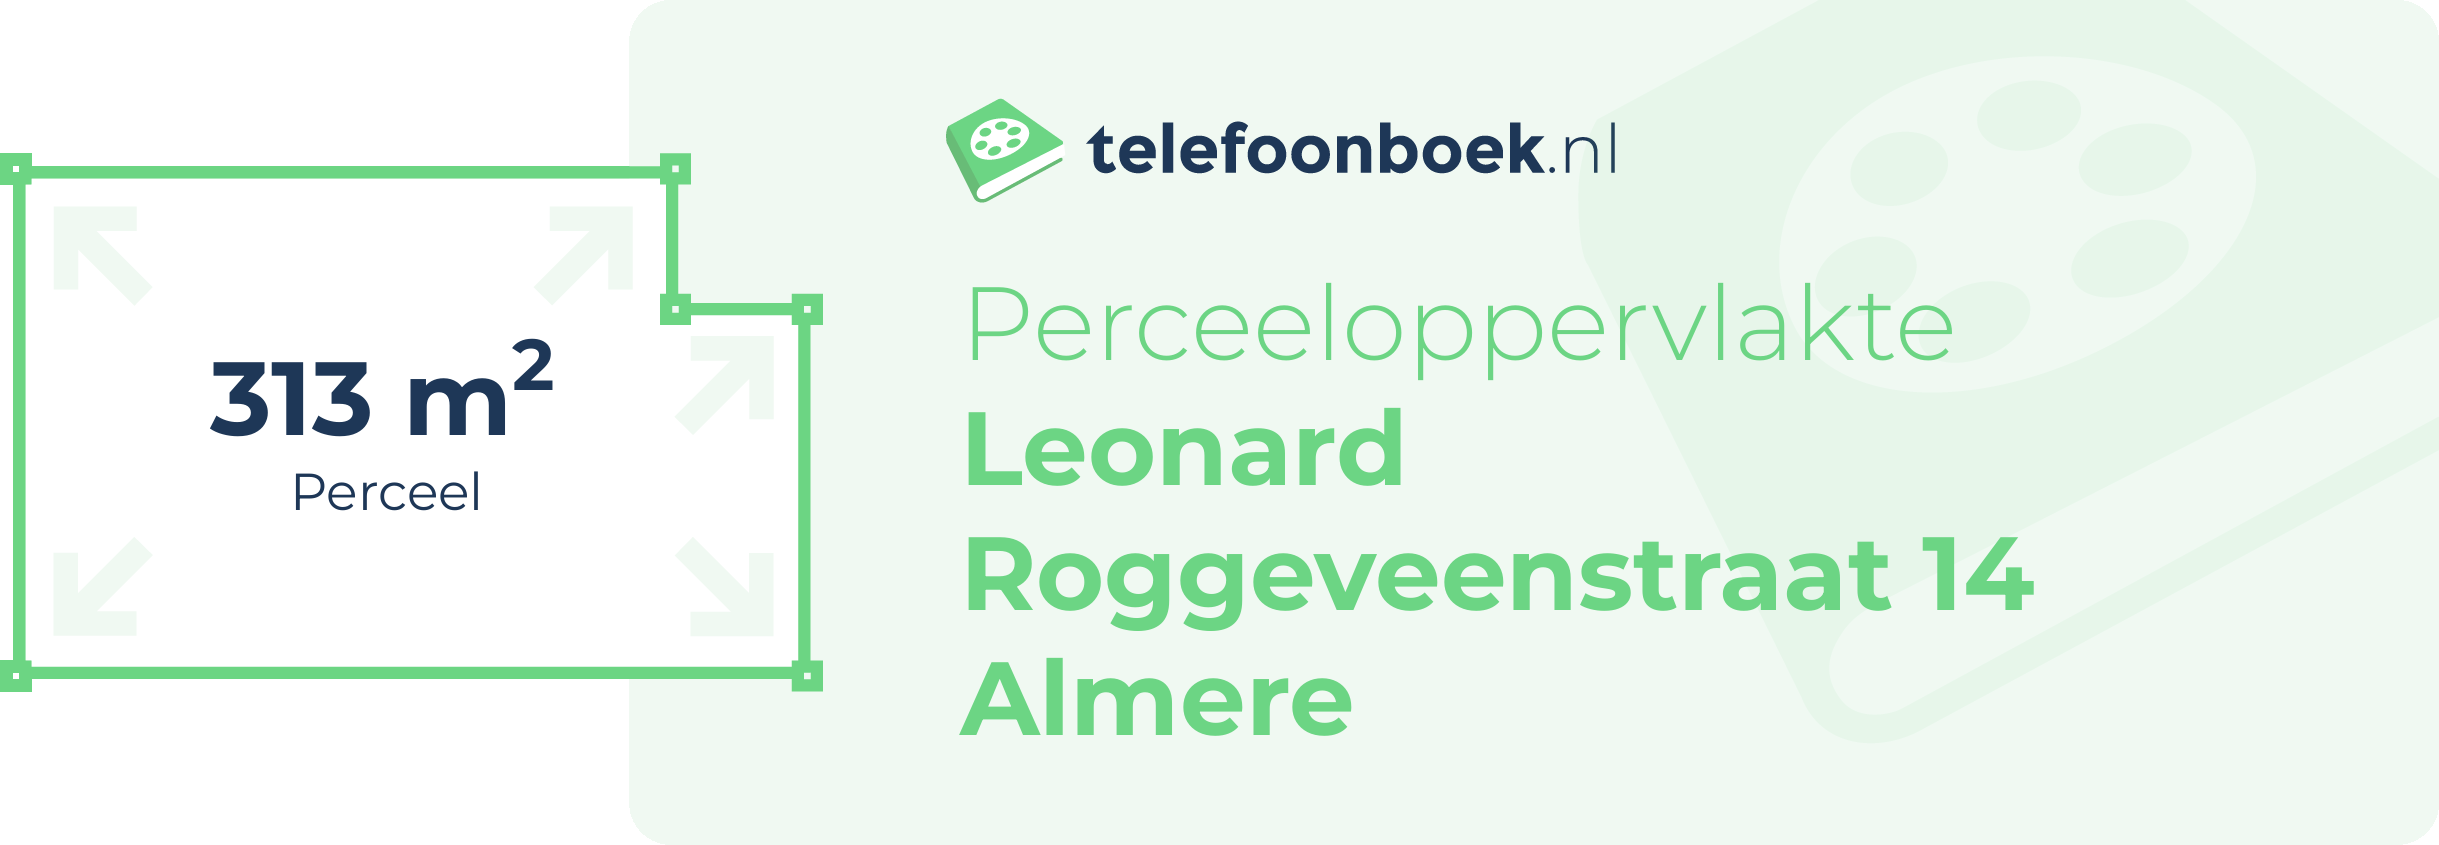 Perceeloppervlakte Leonard Roggeveenstraat 14 Almere